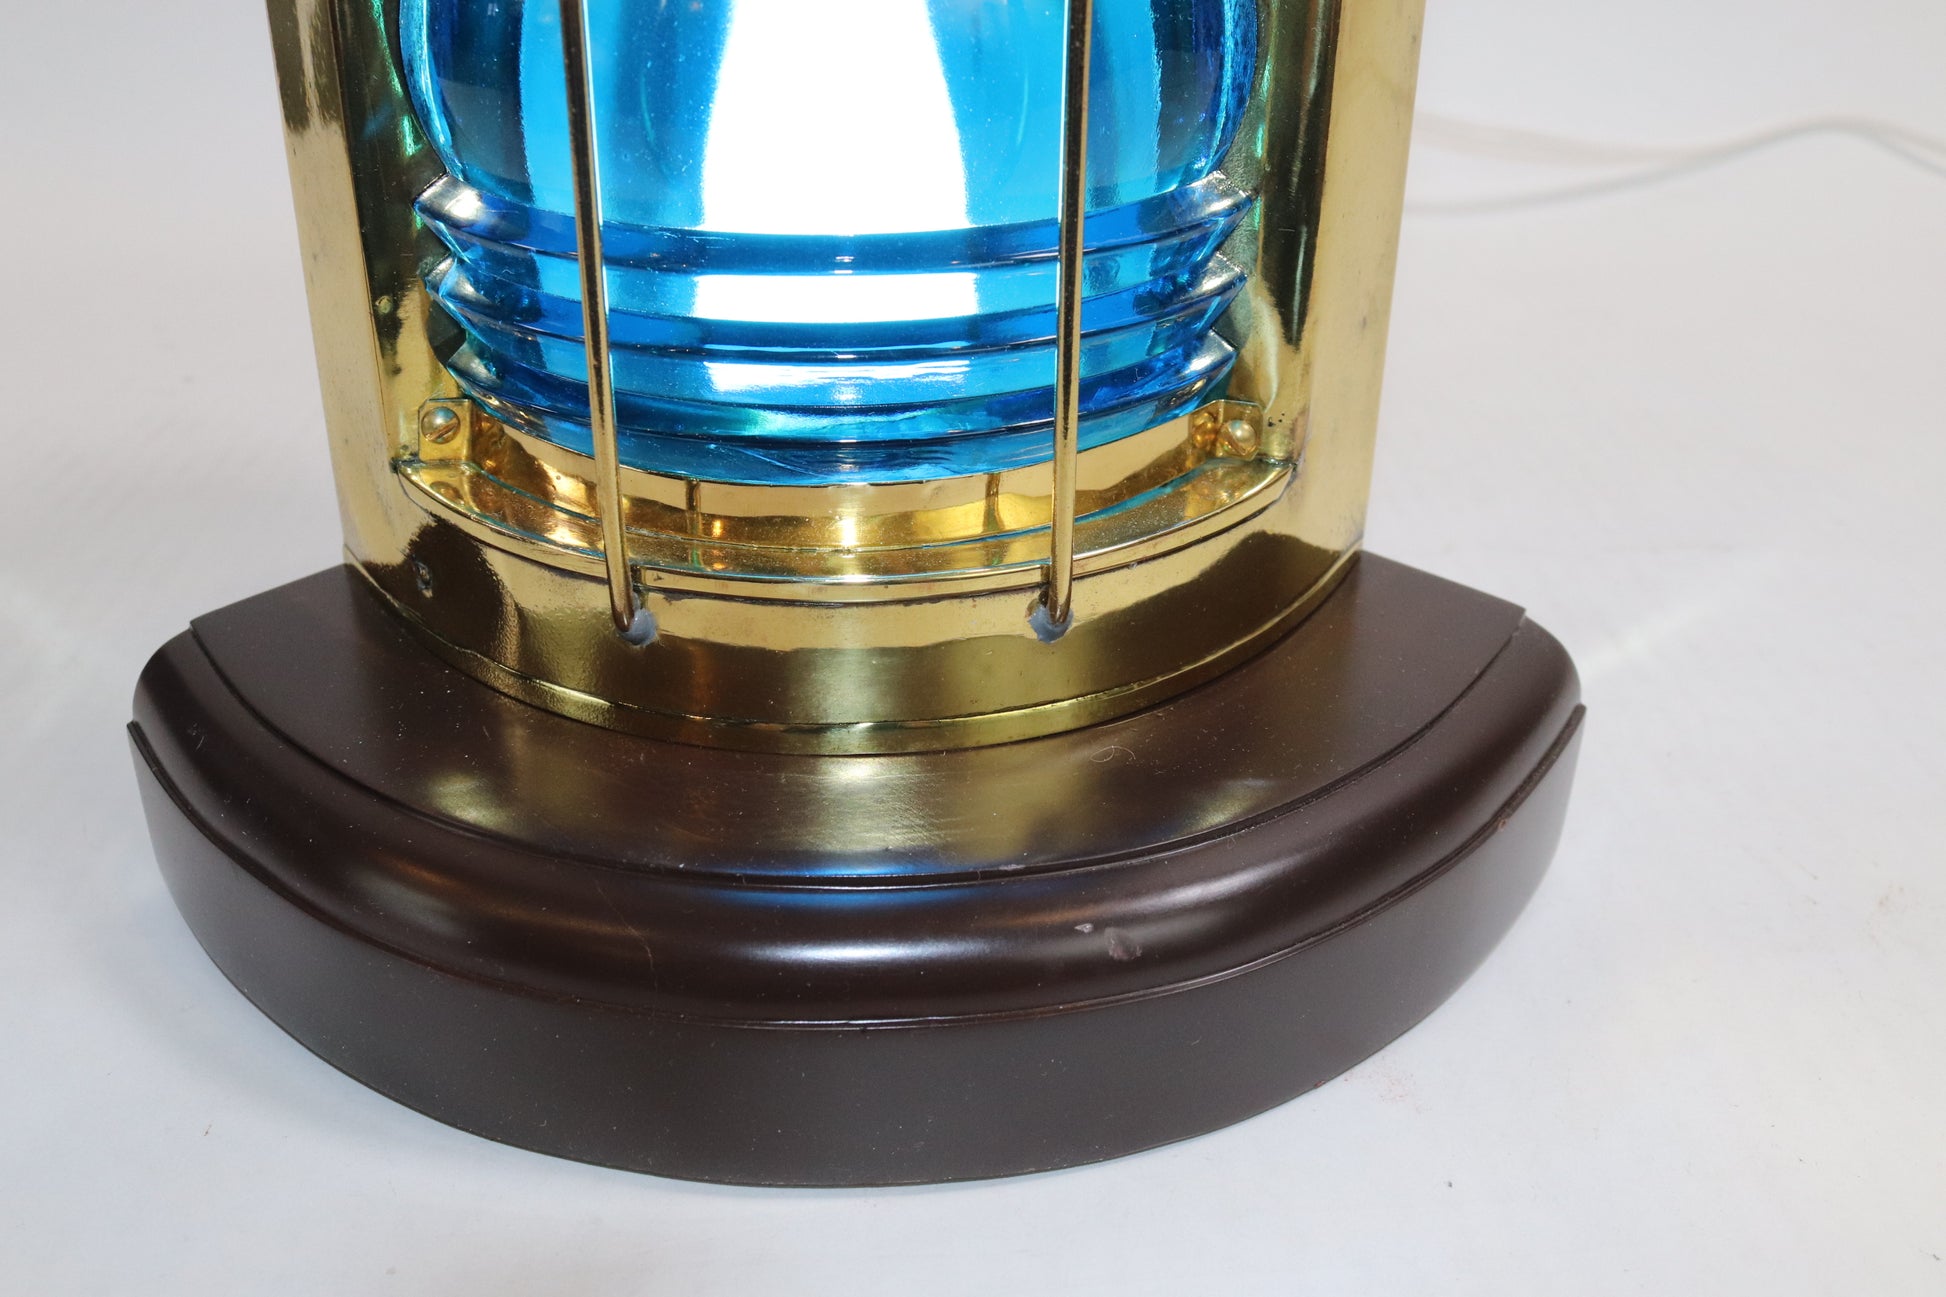 Brass Lantern by National Marine Lamp Company - Lannan Gallery